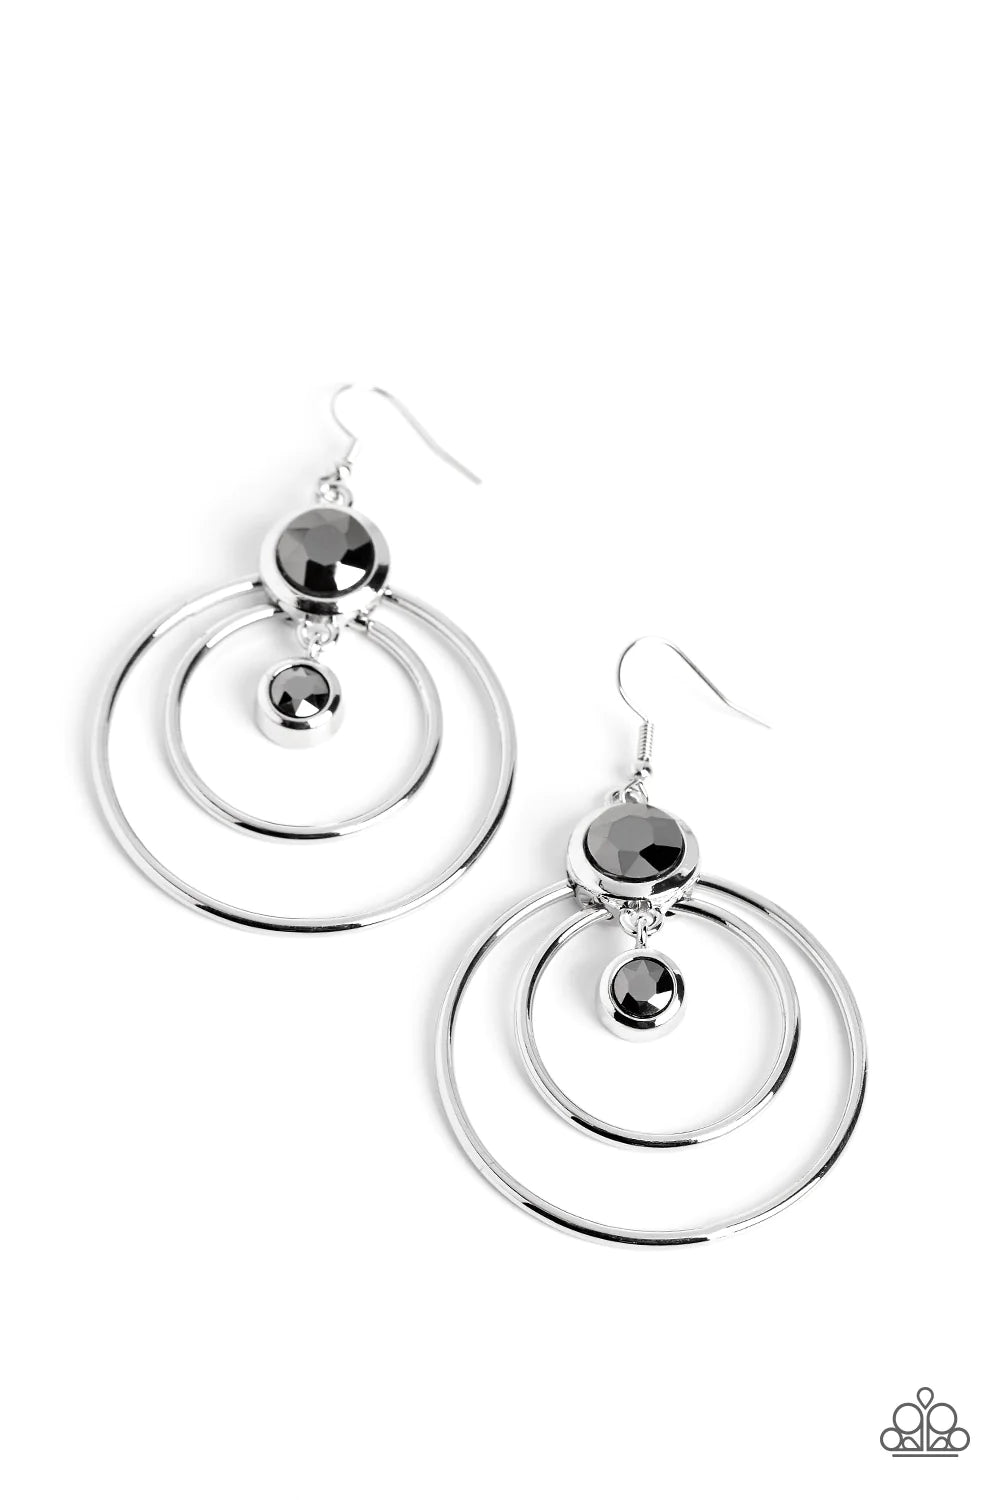  Silver Earrings Hoop - Paparazzi Dapperly Deluxe Paparazzi jewelry image